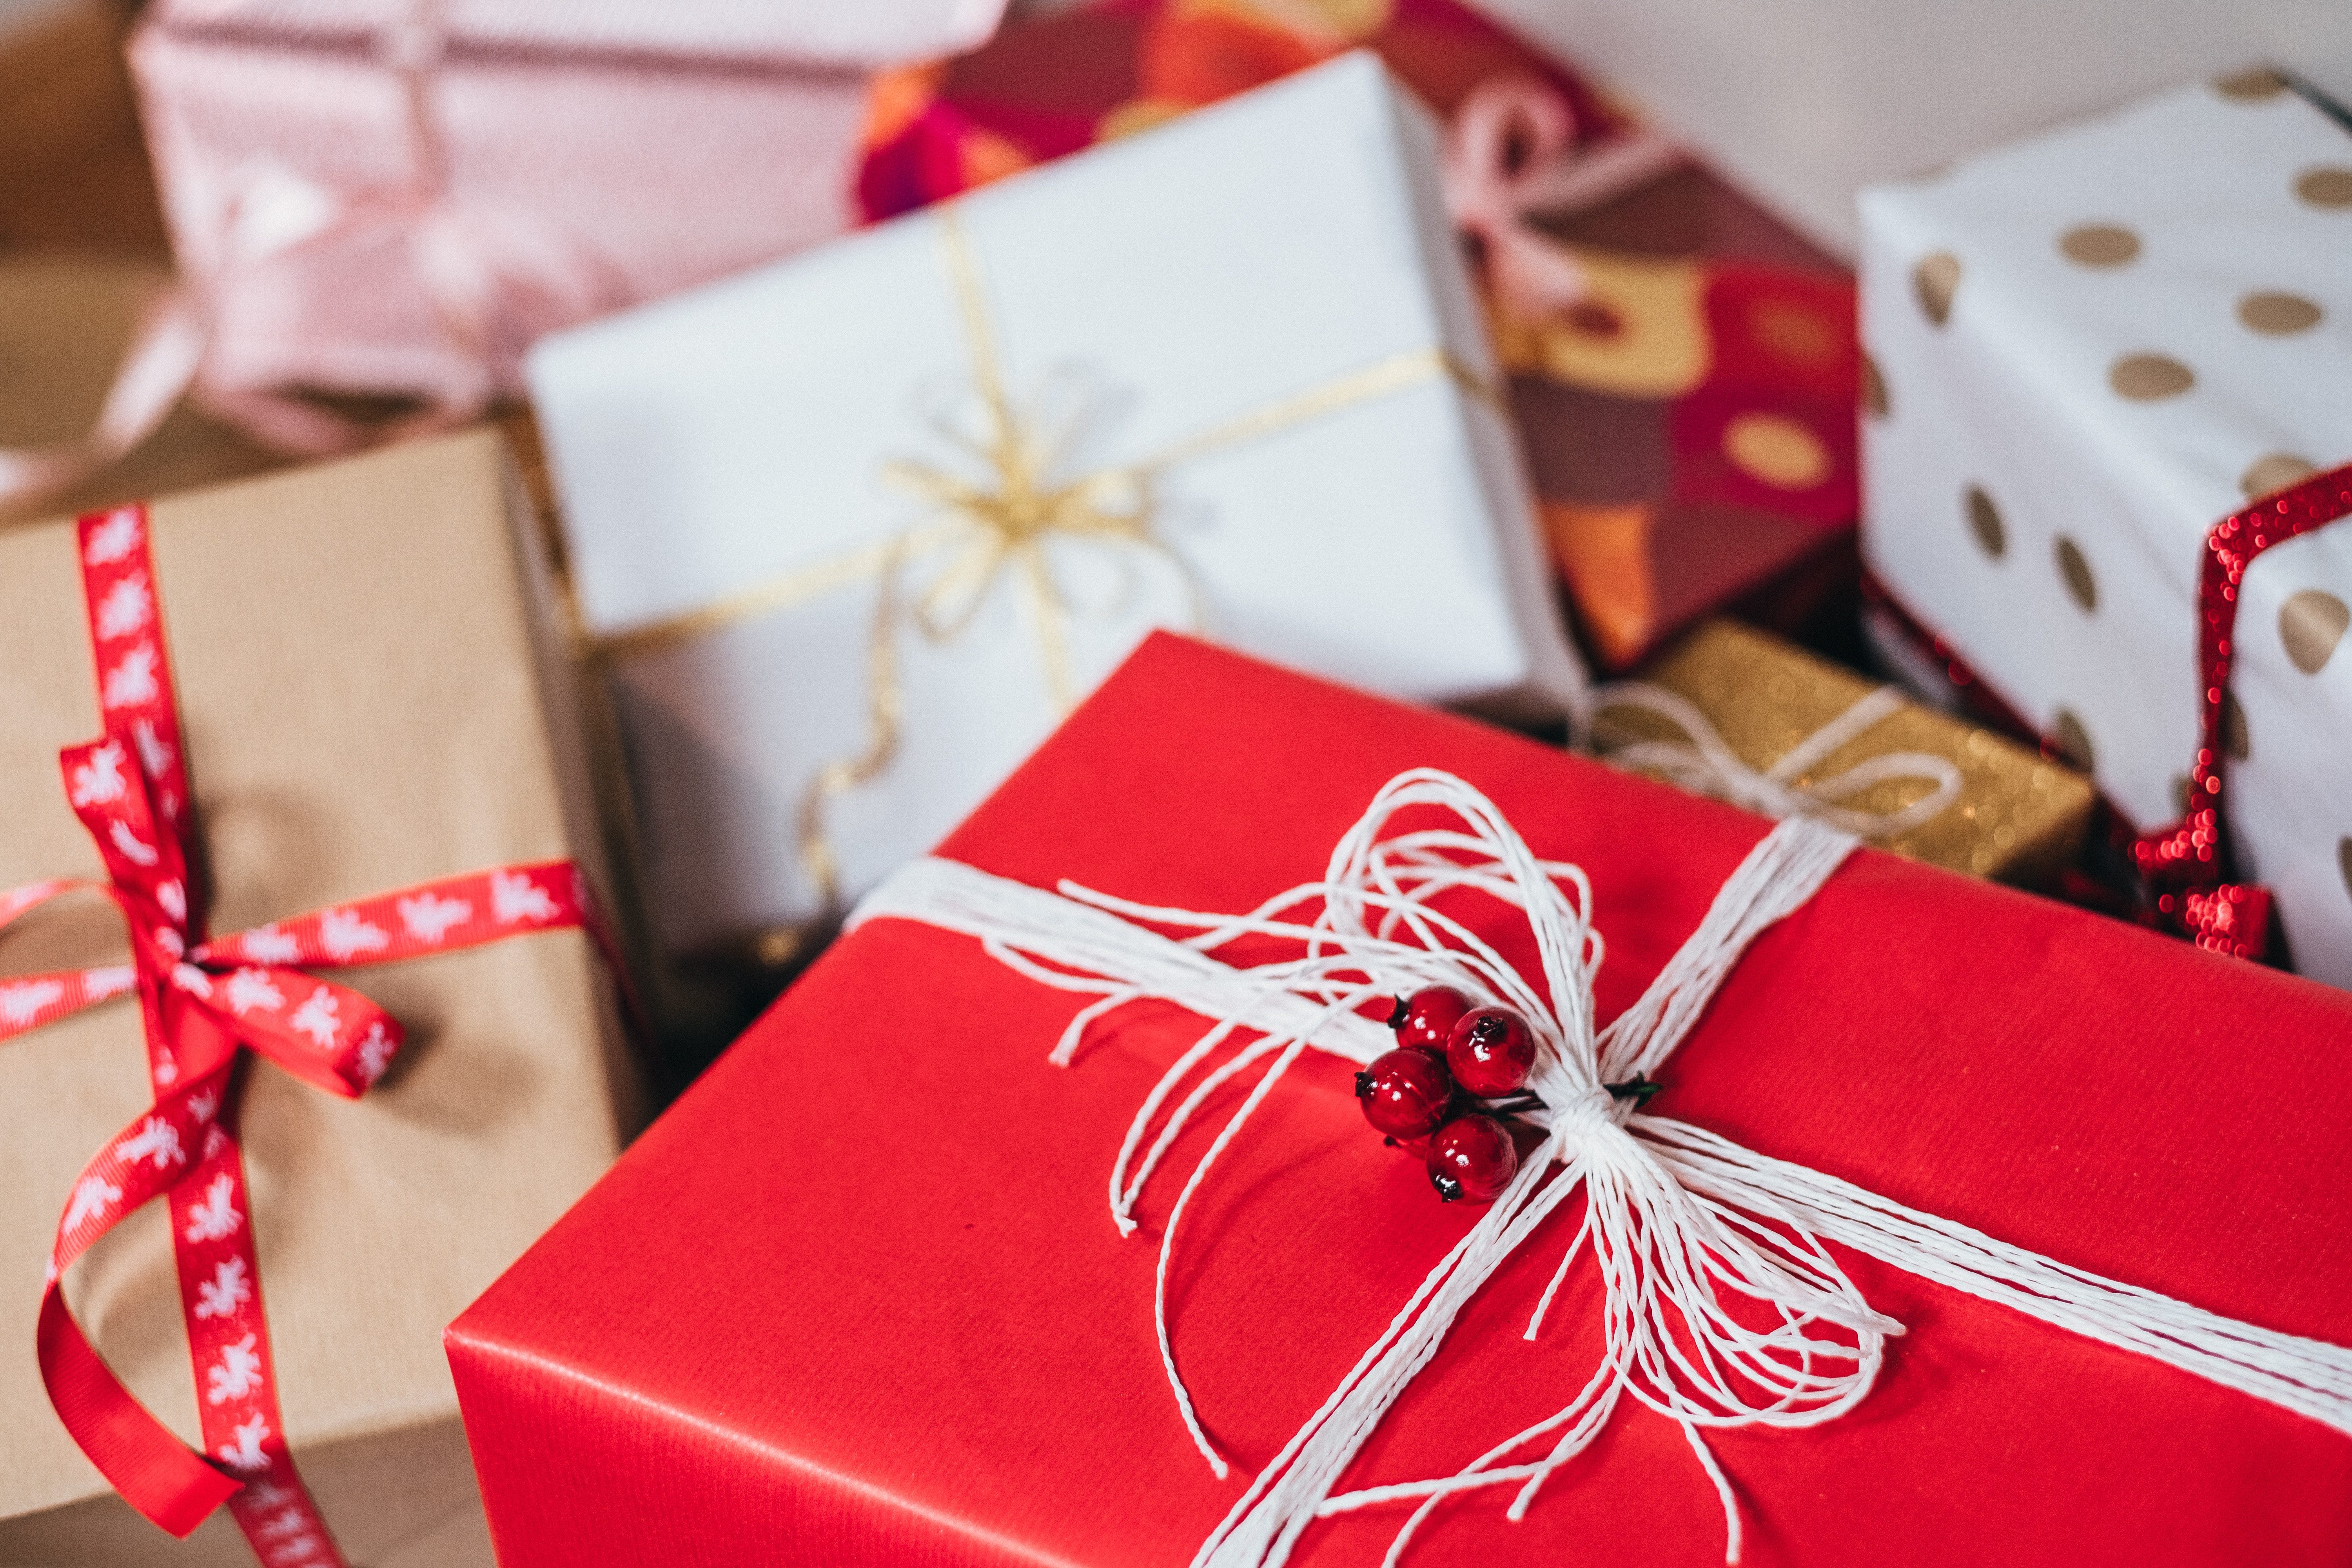 Christmas gifts secret Santa exchange